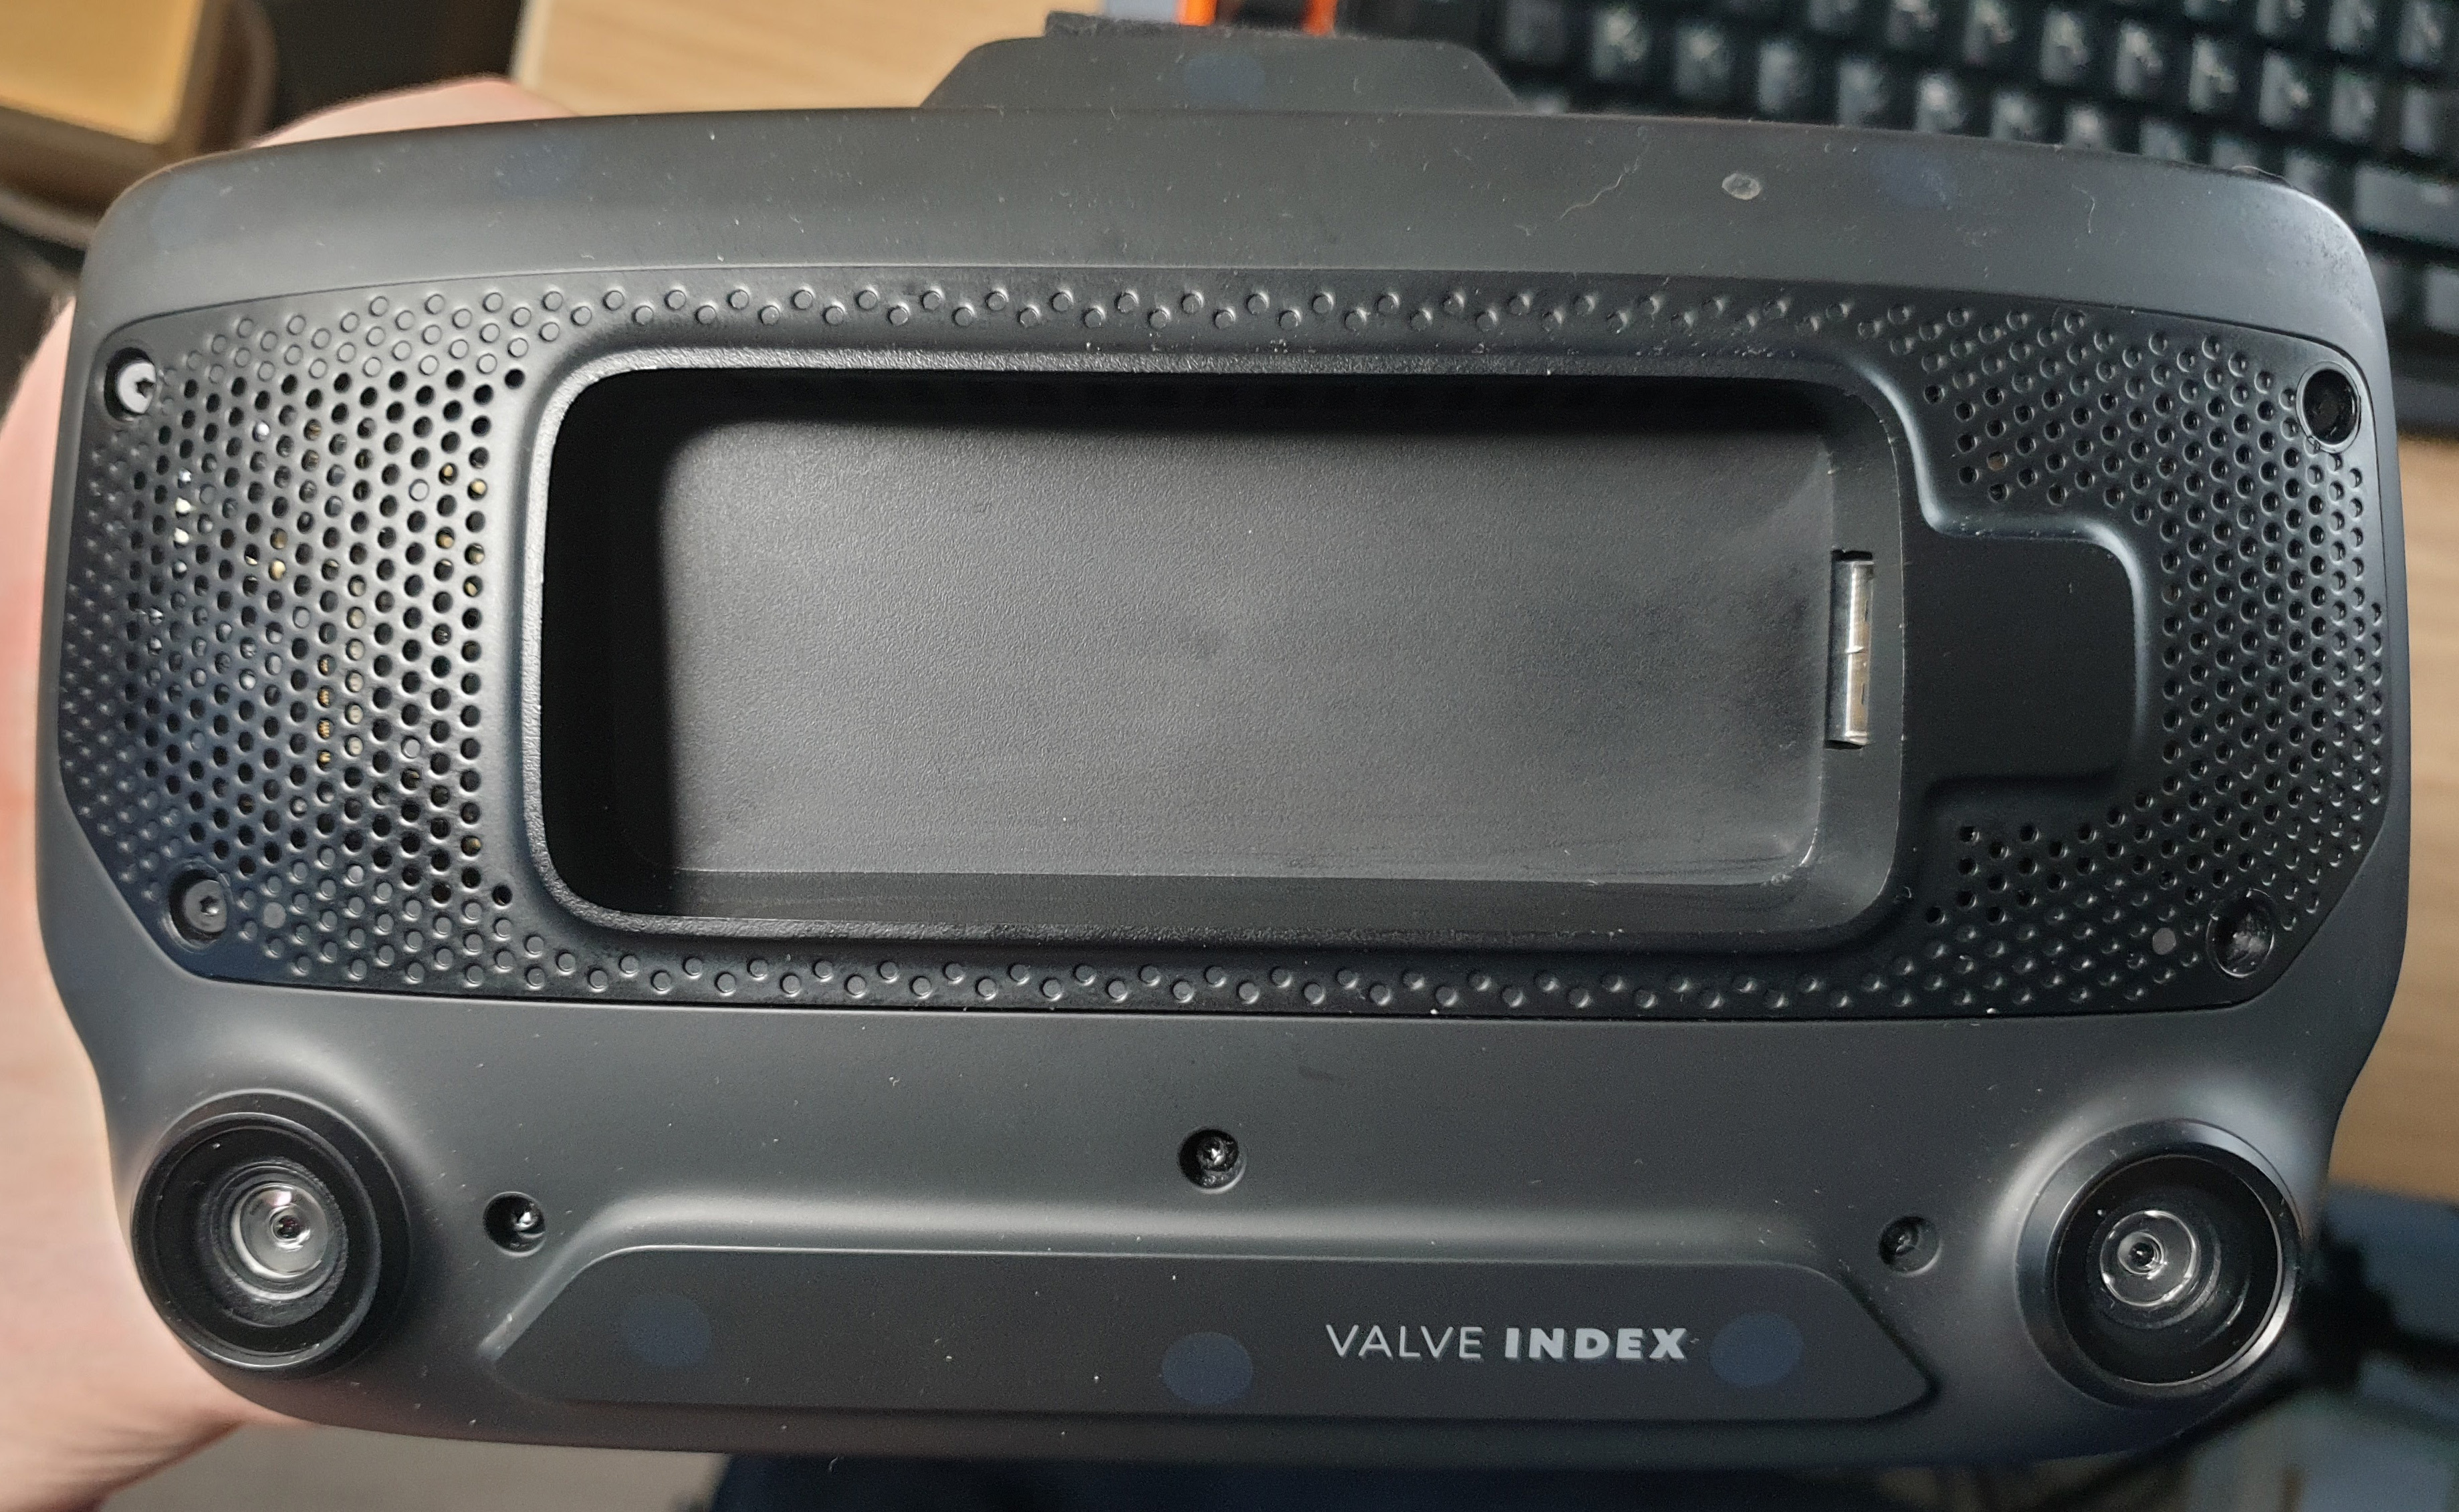 Valve Index HMD detailed teardown